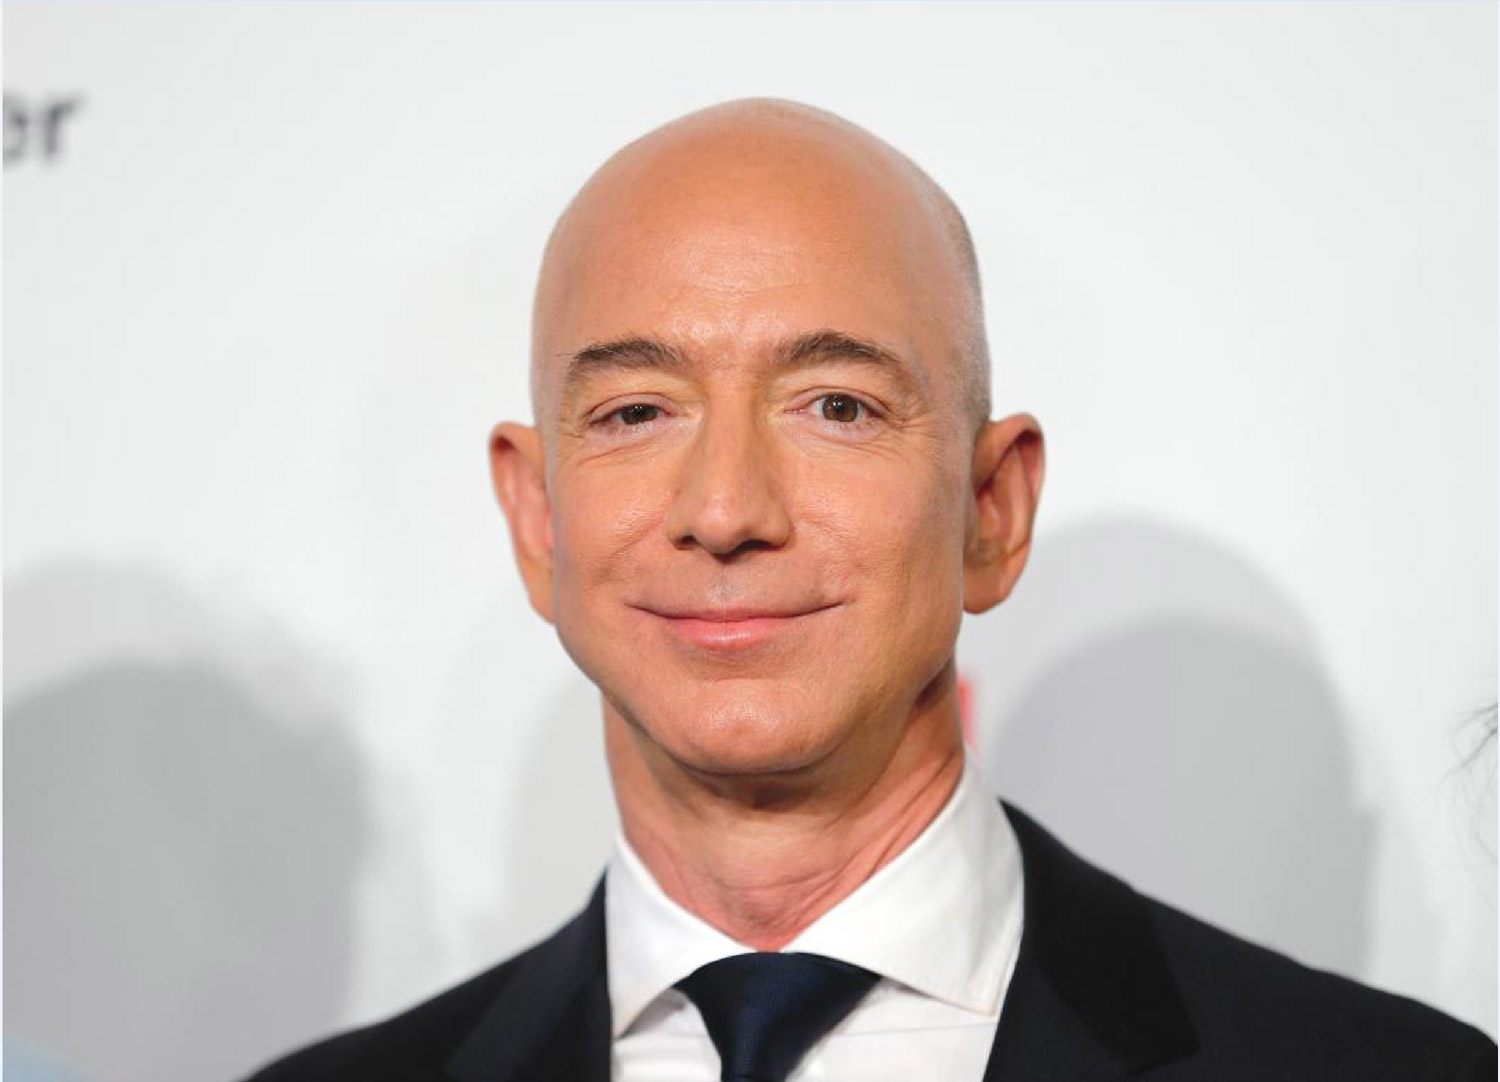 Bild: Jeff Bezos, Amazon, CEO, Forbes Billionaires 2019, USA, Ranking